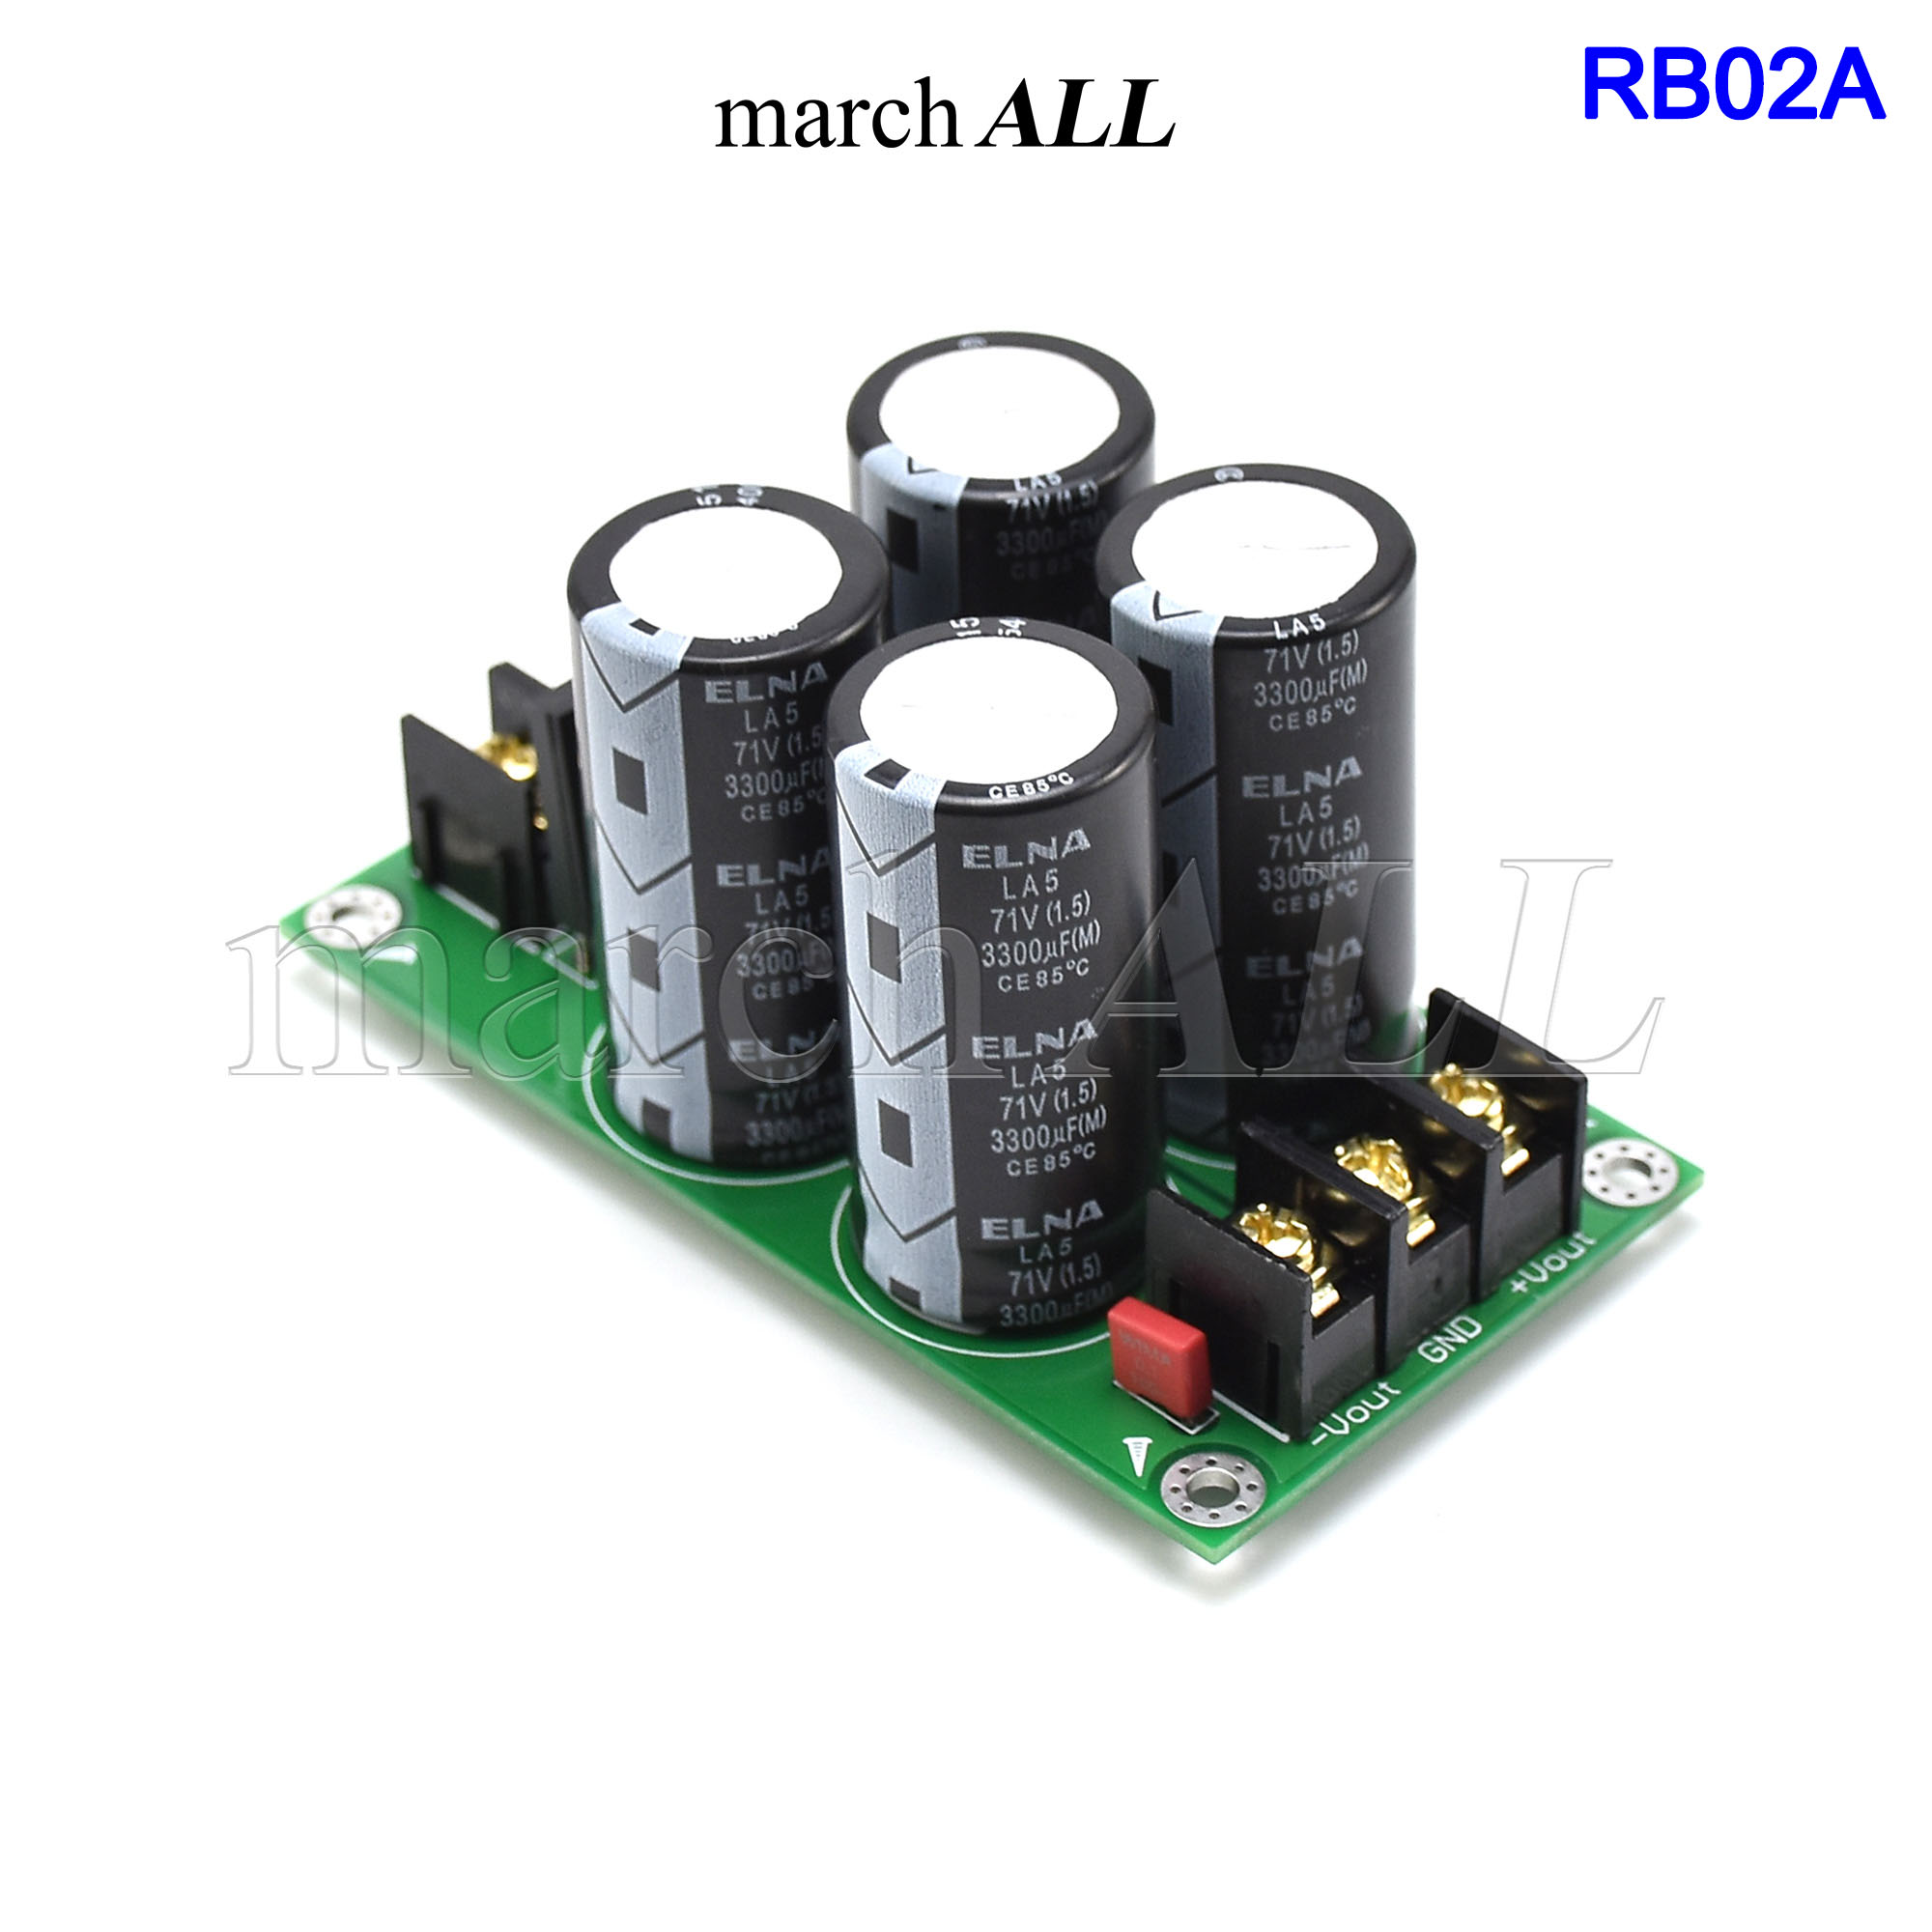 Marchall RB02A ชุดลงอุปกรณ์ บอร์ดเรกติไฟ บอร์ดจ่ายไฟ Dual DC +- Ground บวก ลบ กราวด์ เพาเวอร์ซัพพลาย ดูออล ดีซี เร็กติไฟเออร์ เรียงกระแส กรอง C-Filter เป็นไฟ DC Supply จากหม้อแปลง ใช้กับ บอร์ดไดร์741 แอมป์ ทุกวงจร อิเล็ก Audio Amplifier ปรีแอมป์ กีต้าร์